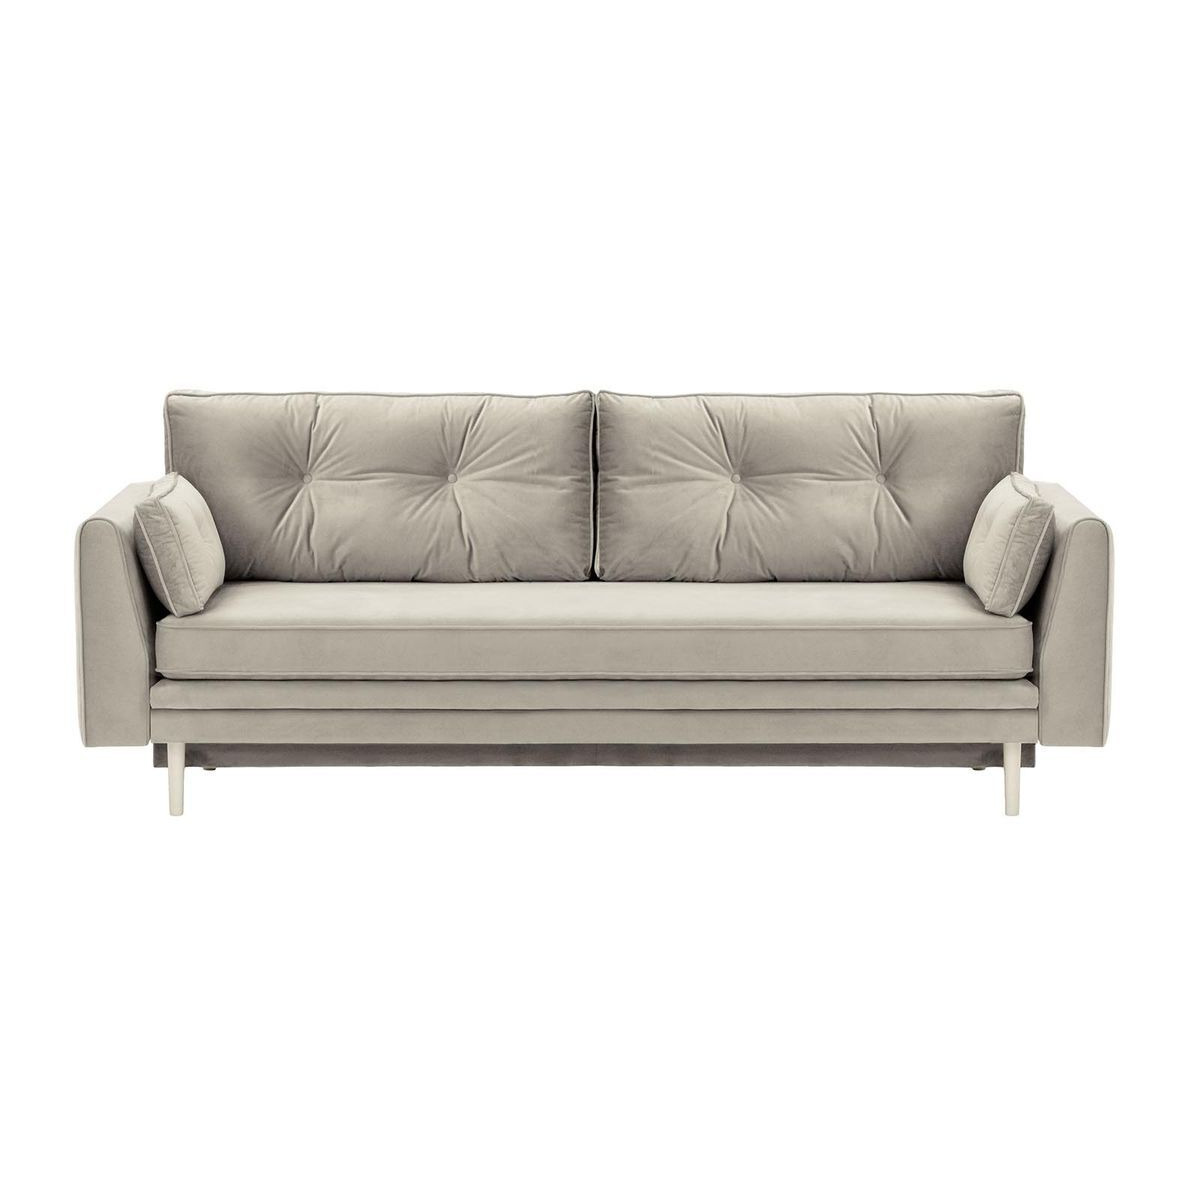 Magnus Sofa Bed with Storage, silver, Leg colour: white - image 1